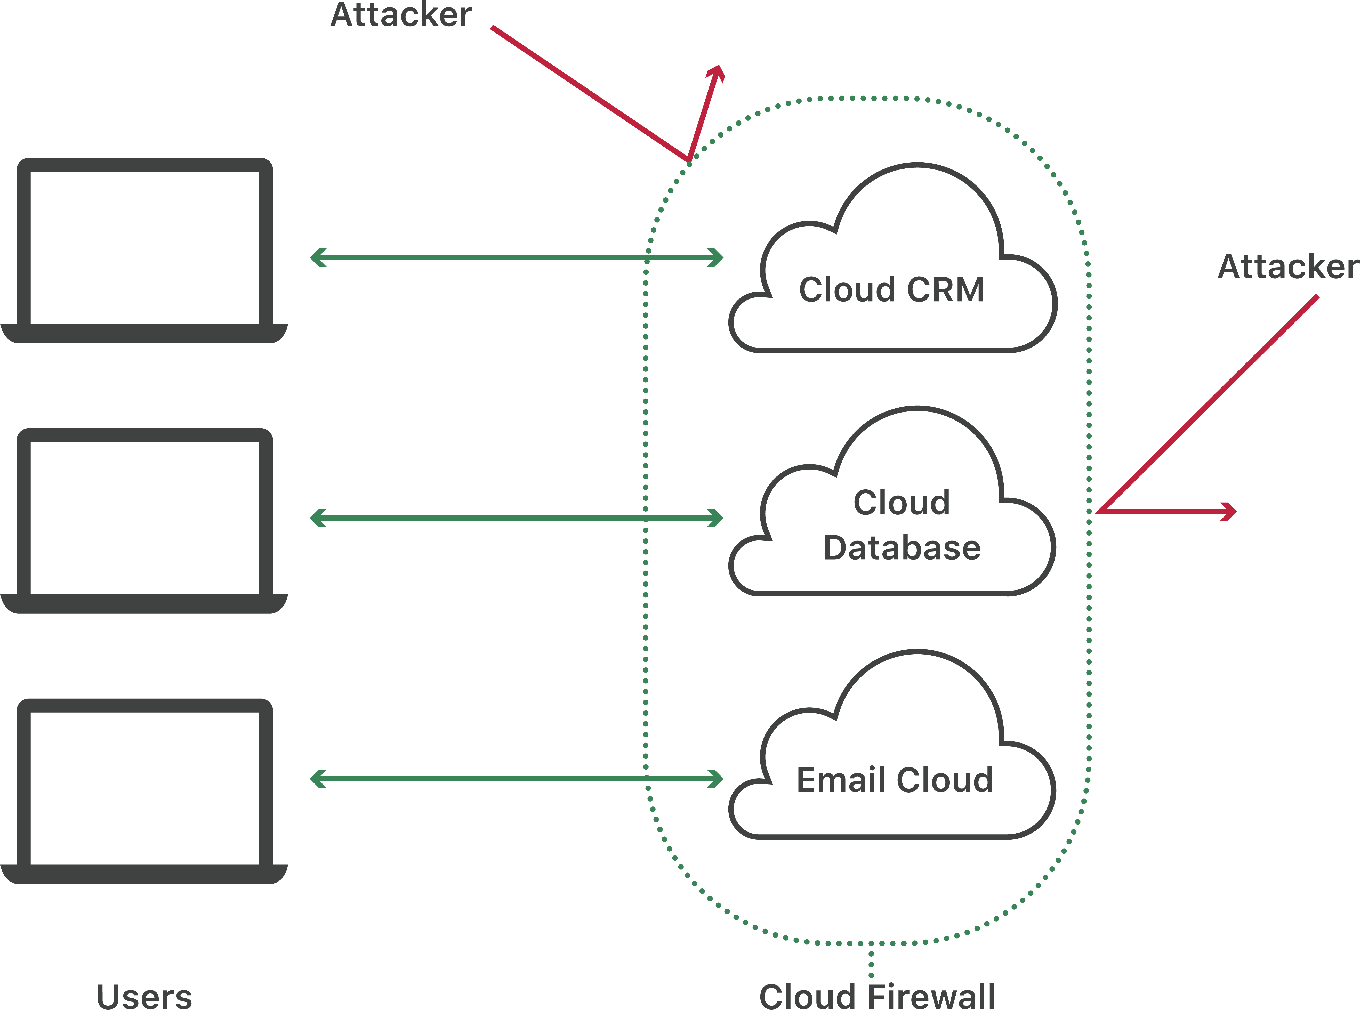 Cloud firewall blocks attacks at cloud deployments